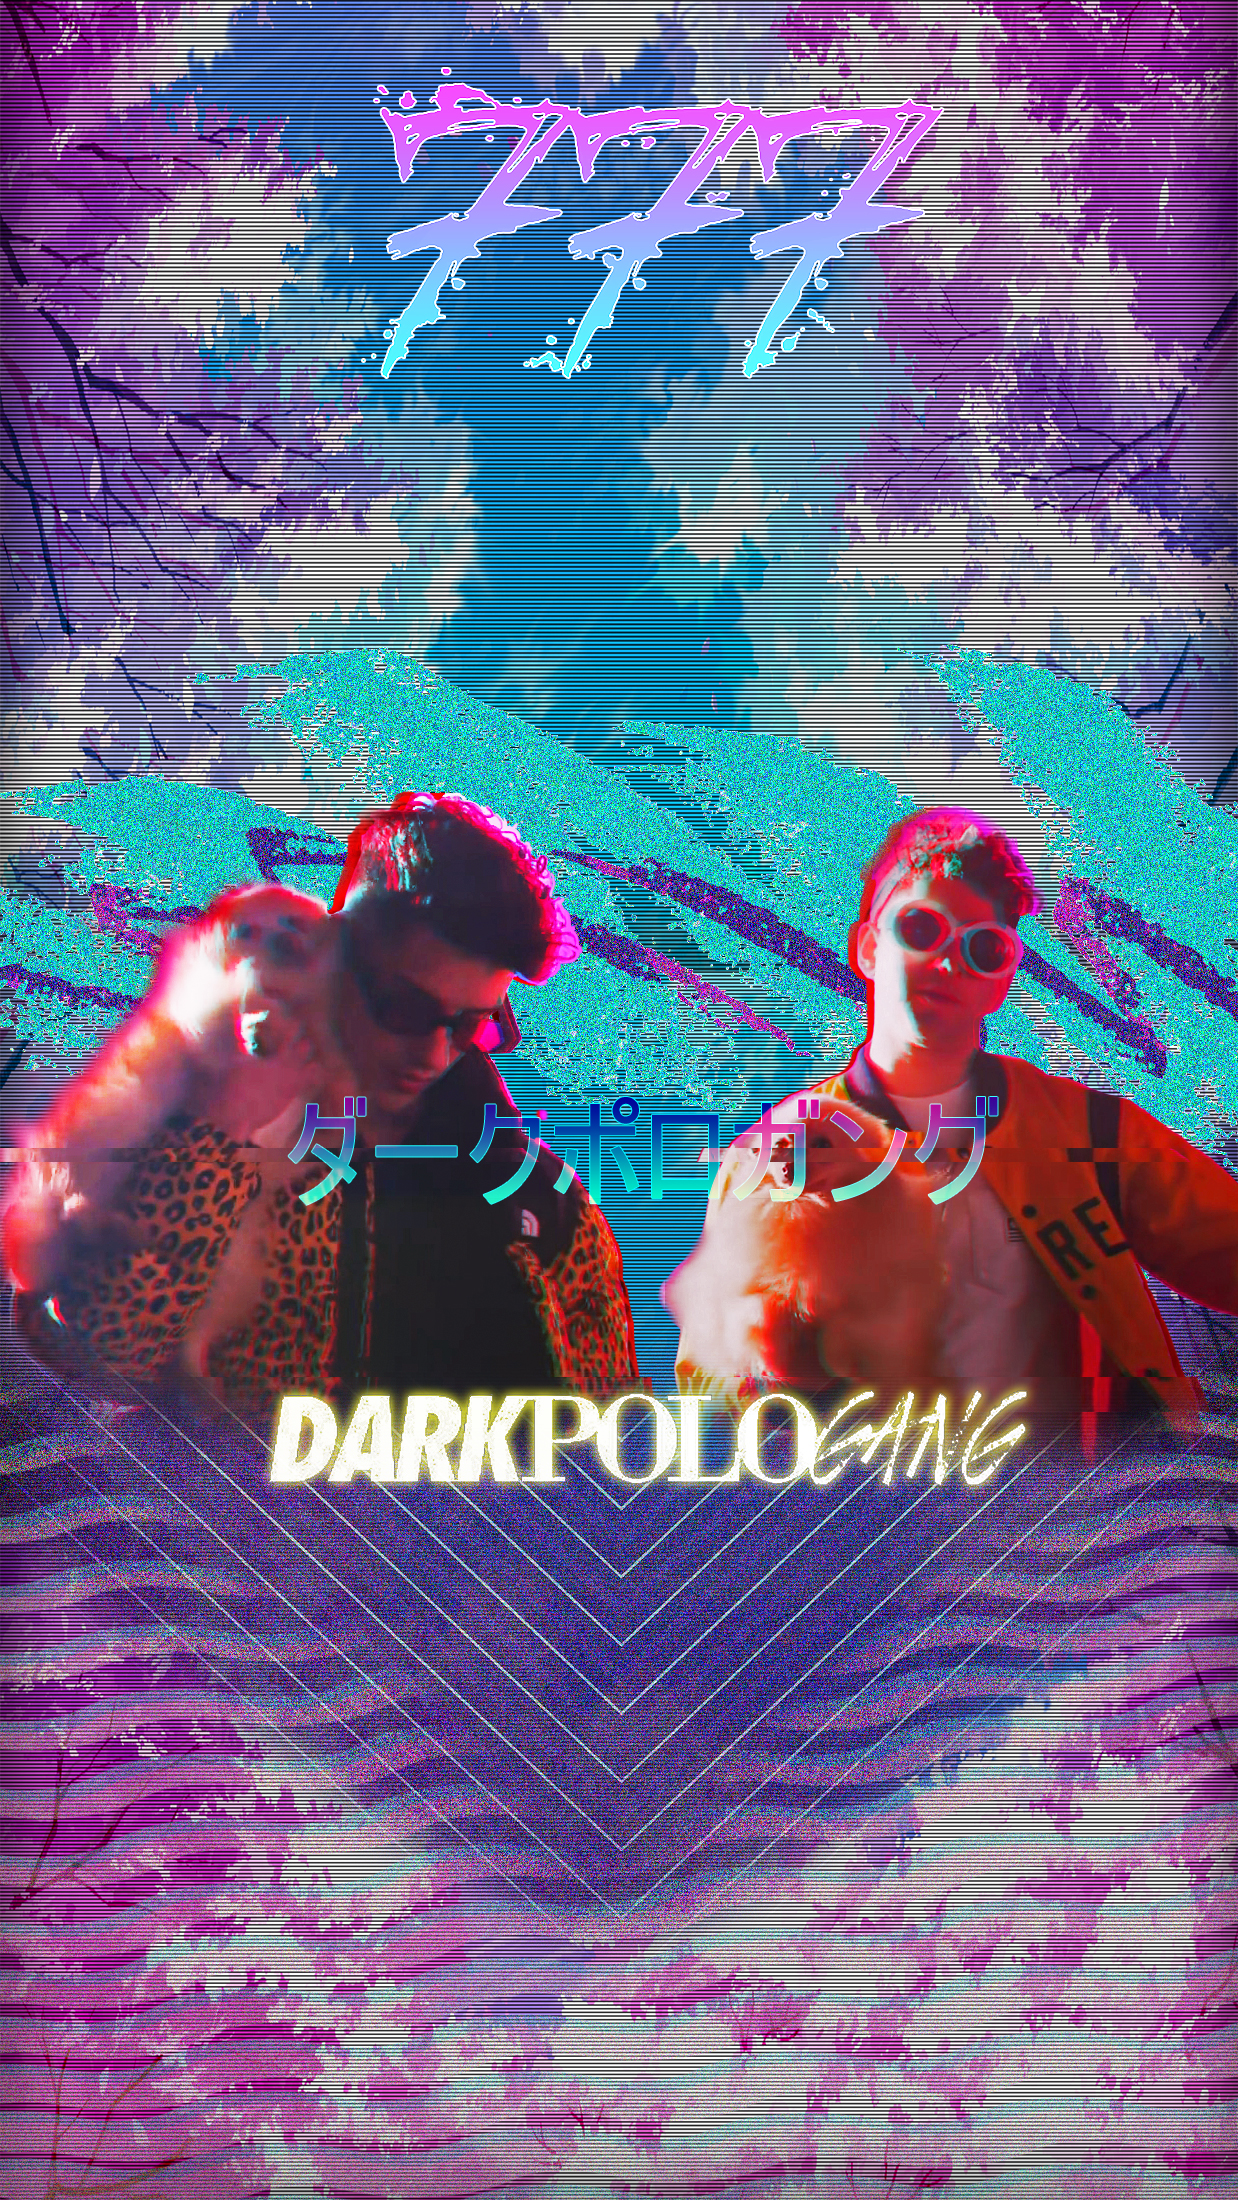 Dark Polo Gang vaporwave 2